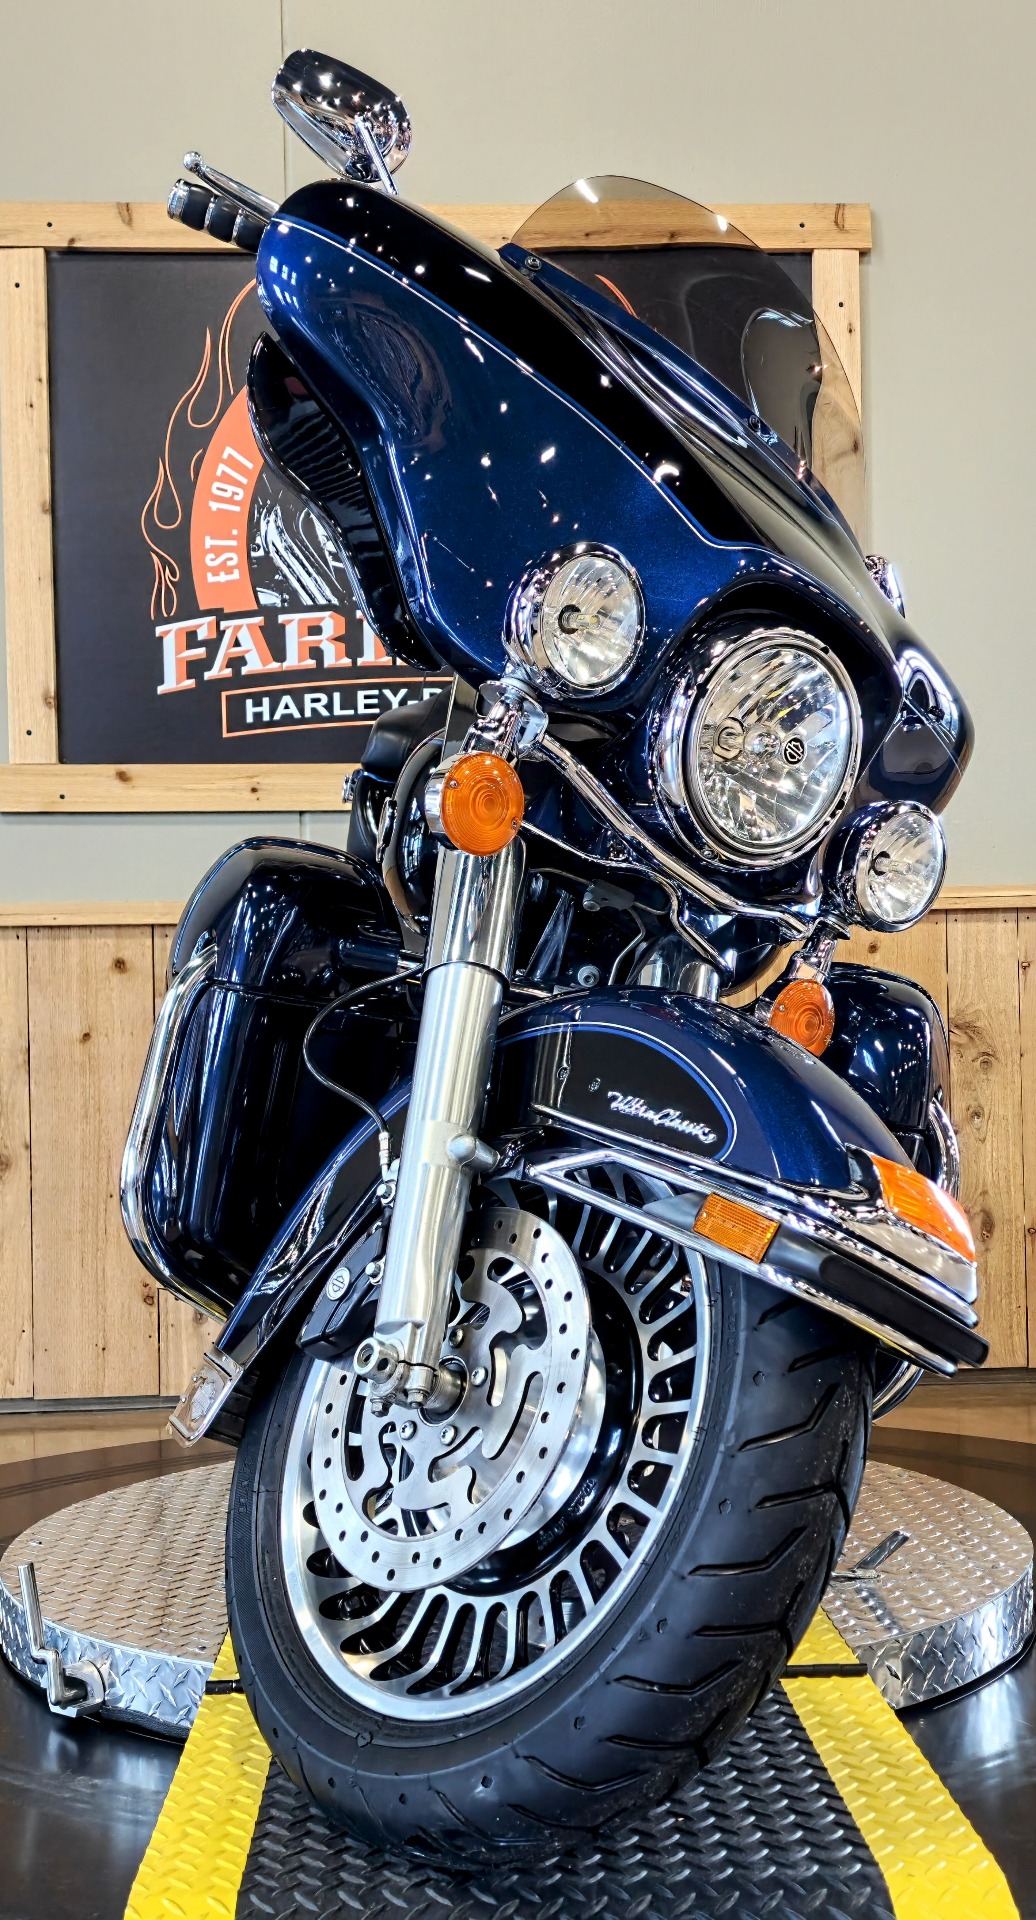 2012 Harley-Davidson Ultra Classic® Electra Glide® in Faribault, Minnesota - Photo 3